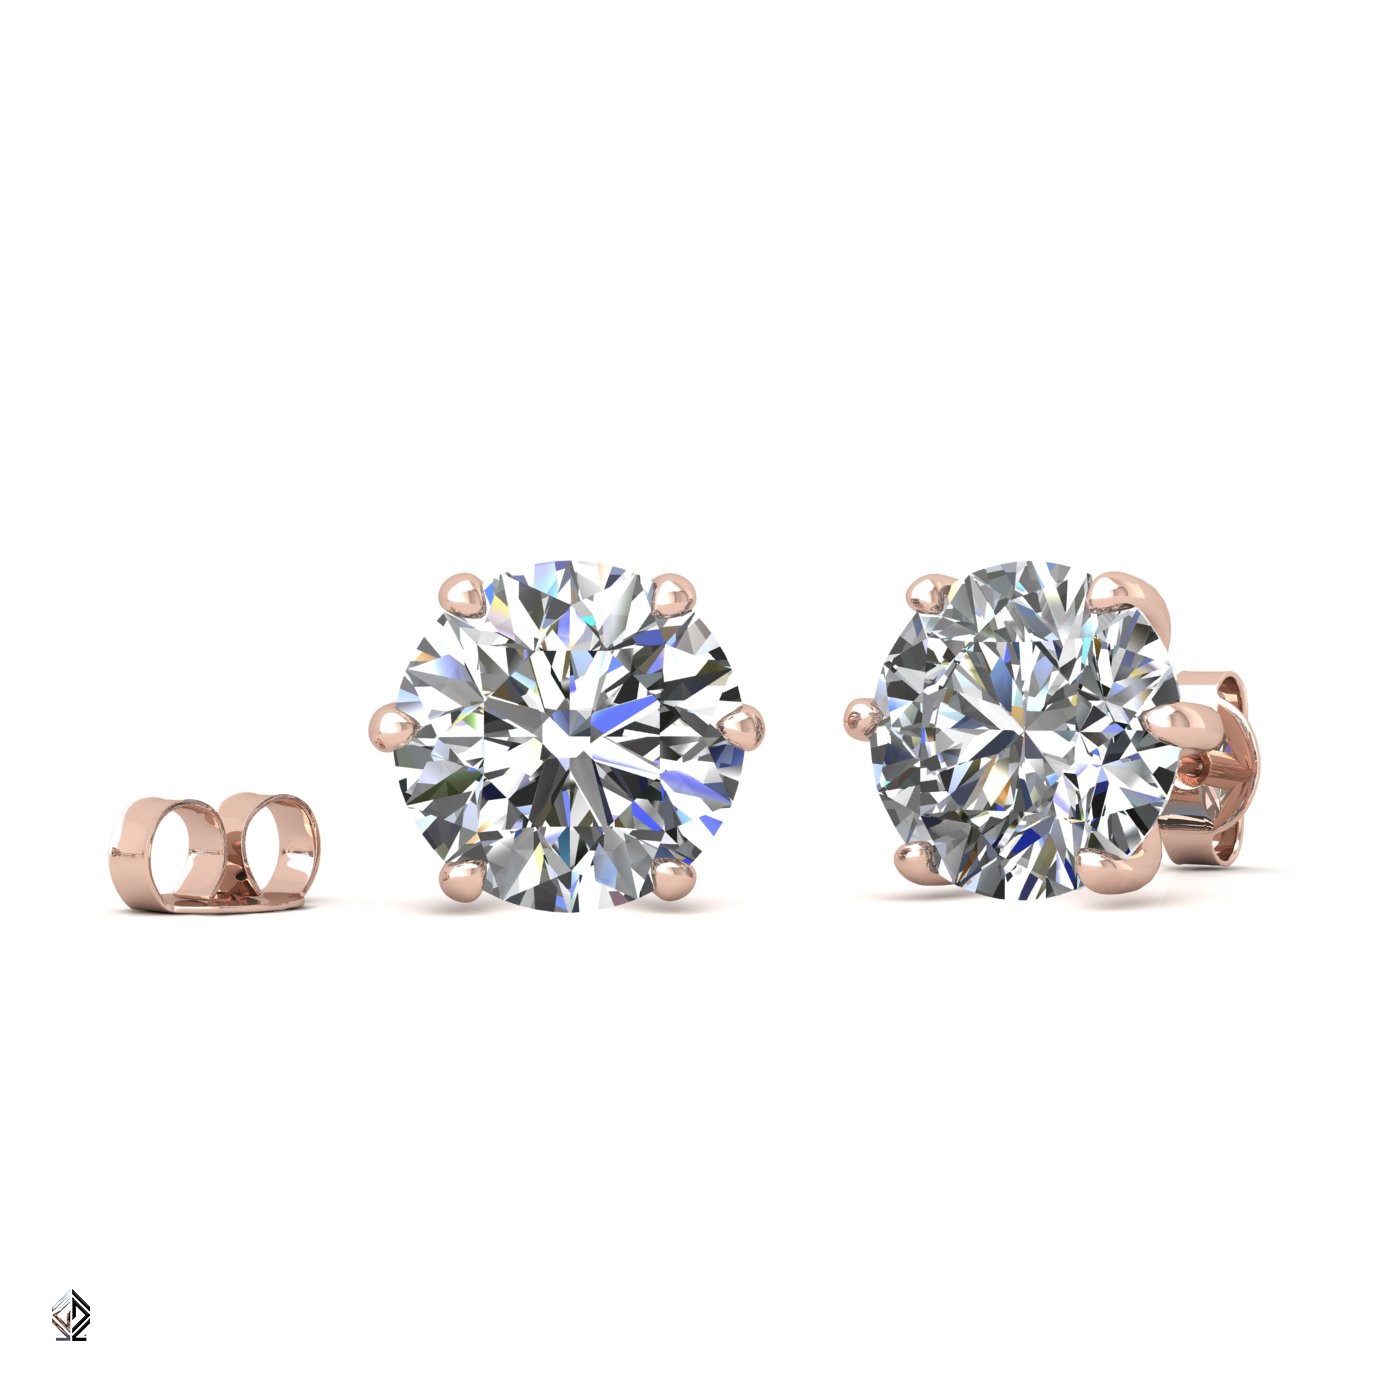 18k rose gold 2.5 ct each (5,0 tcw) 6 prongs round shape diamond earrings